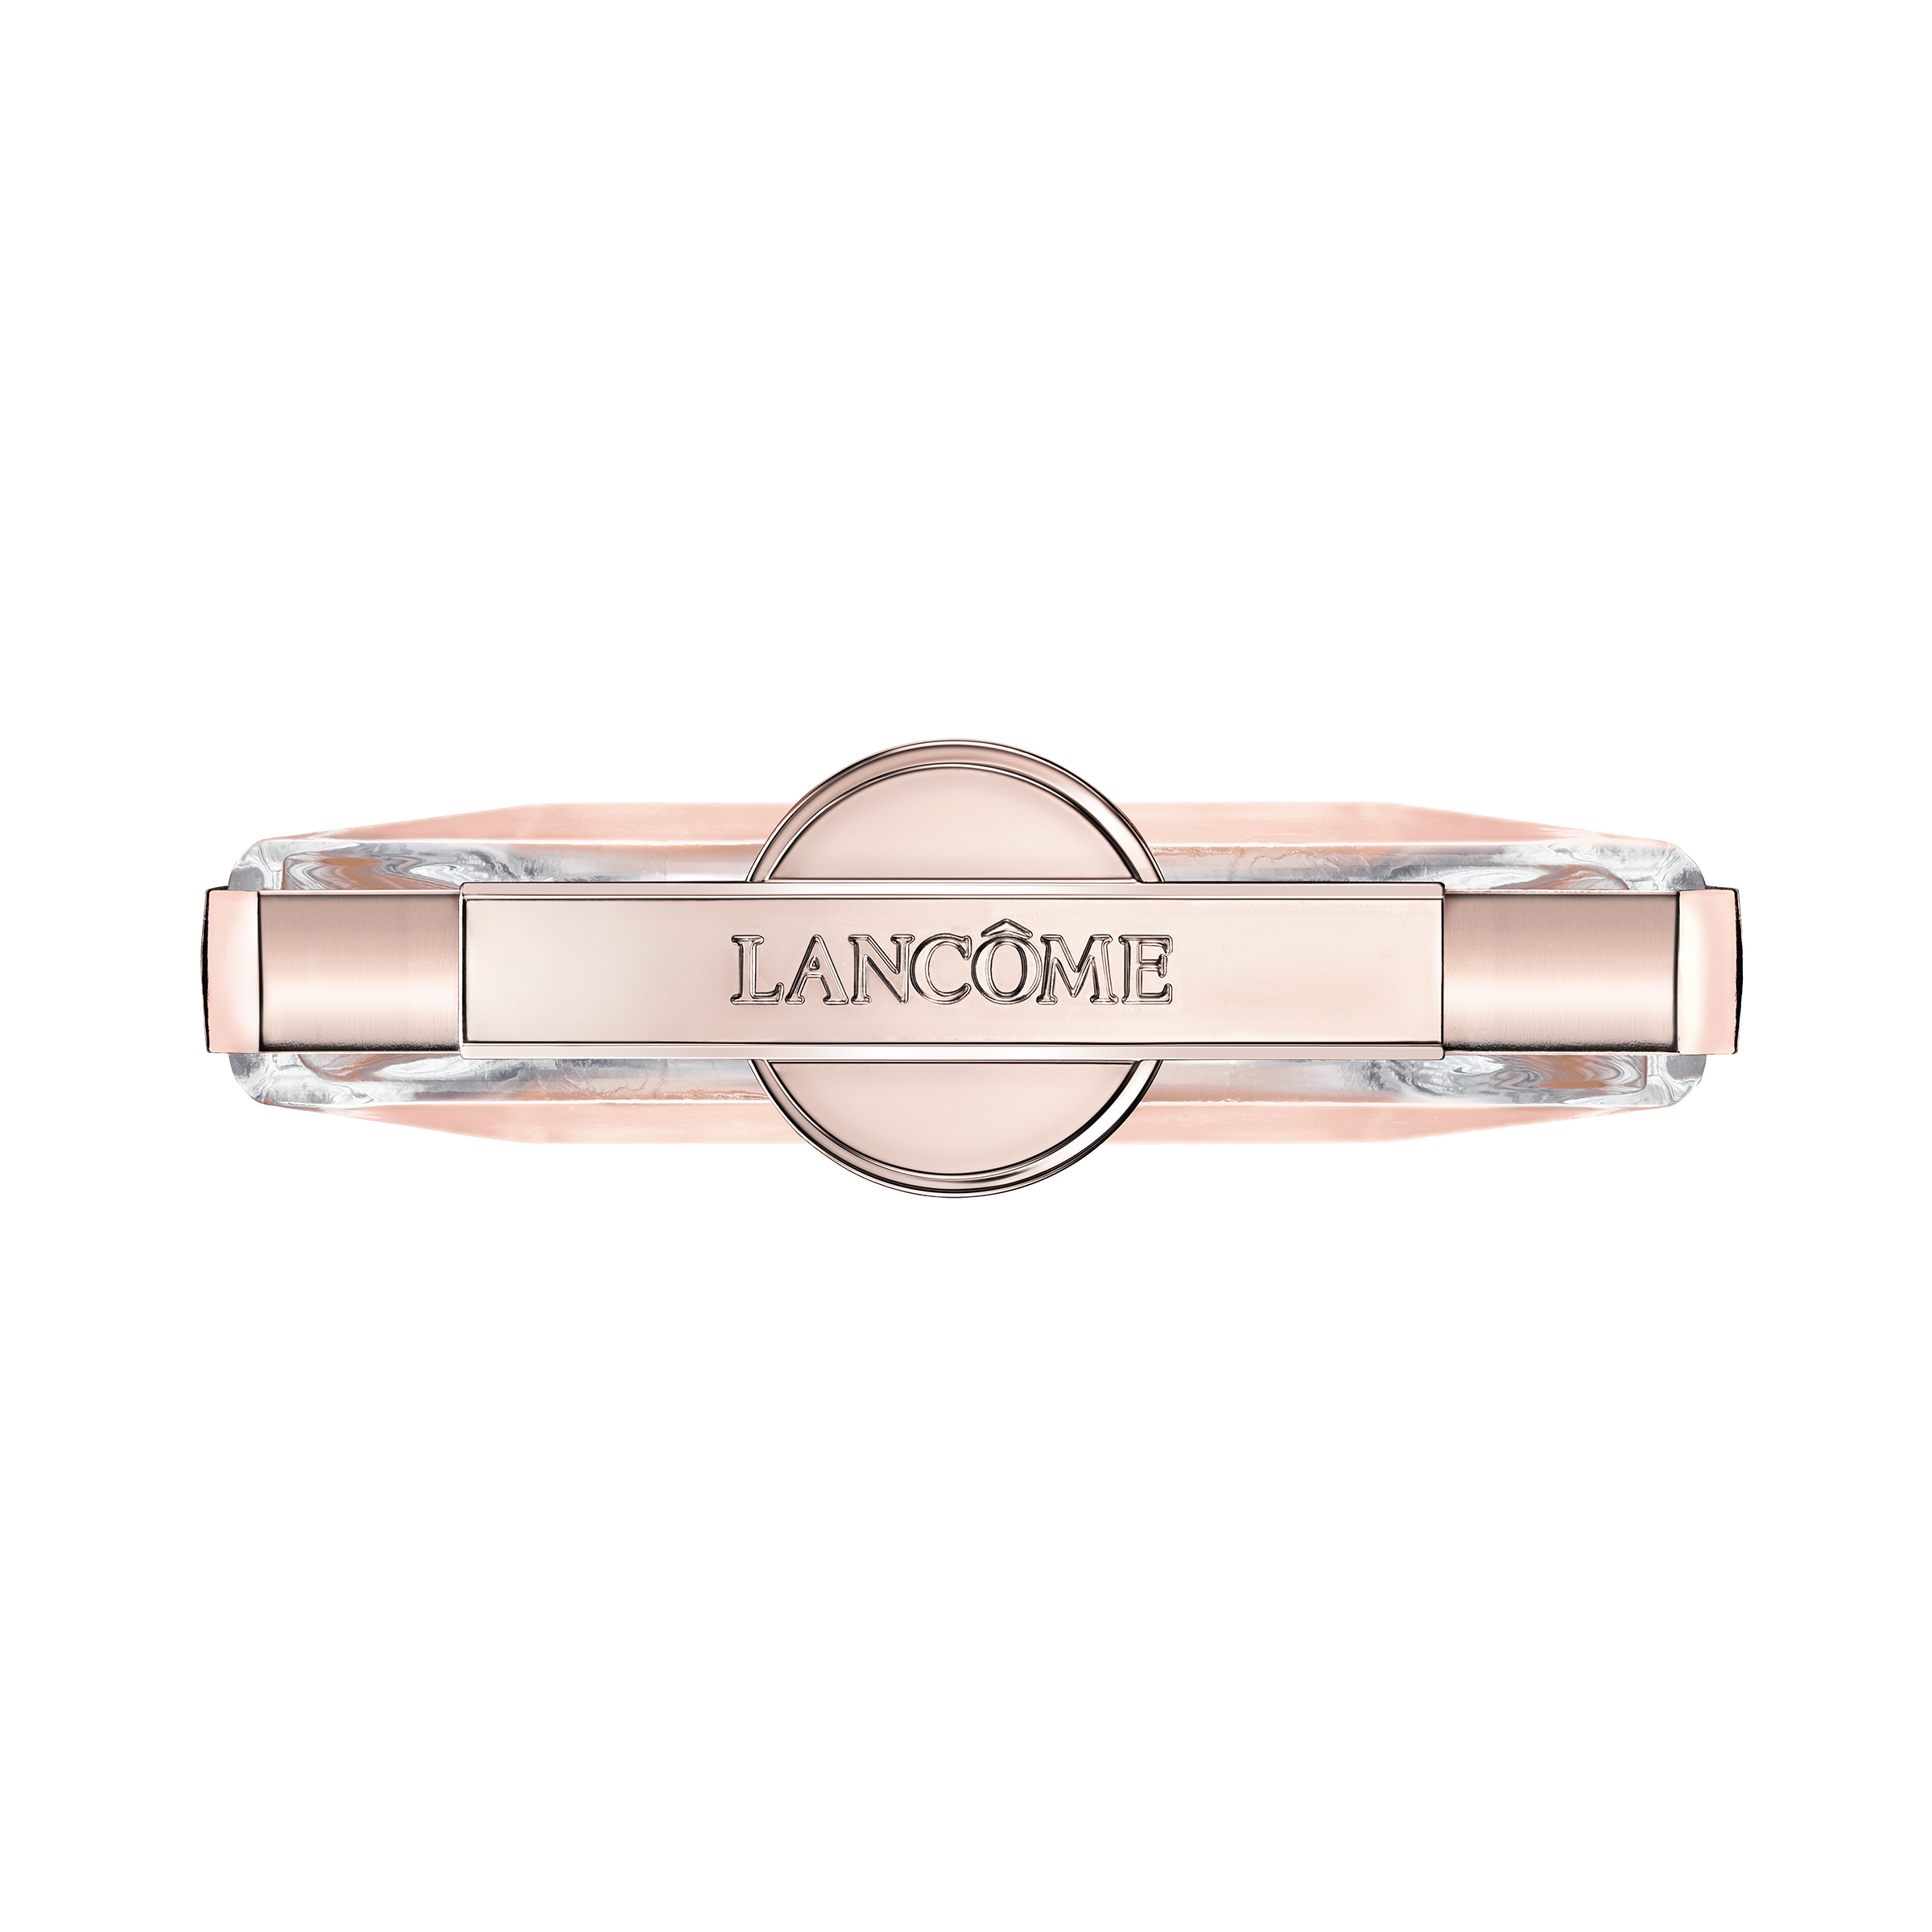 Idôle the new feminine fragrance by Lancôme 3 Lancôme predstavlja Idôle, ženstveni miris za novu generaciju